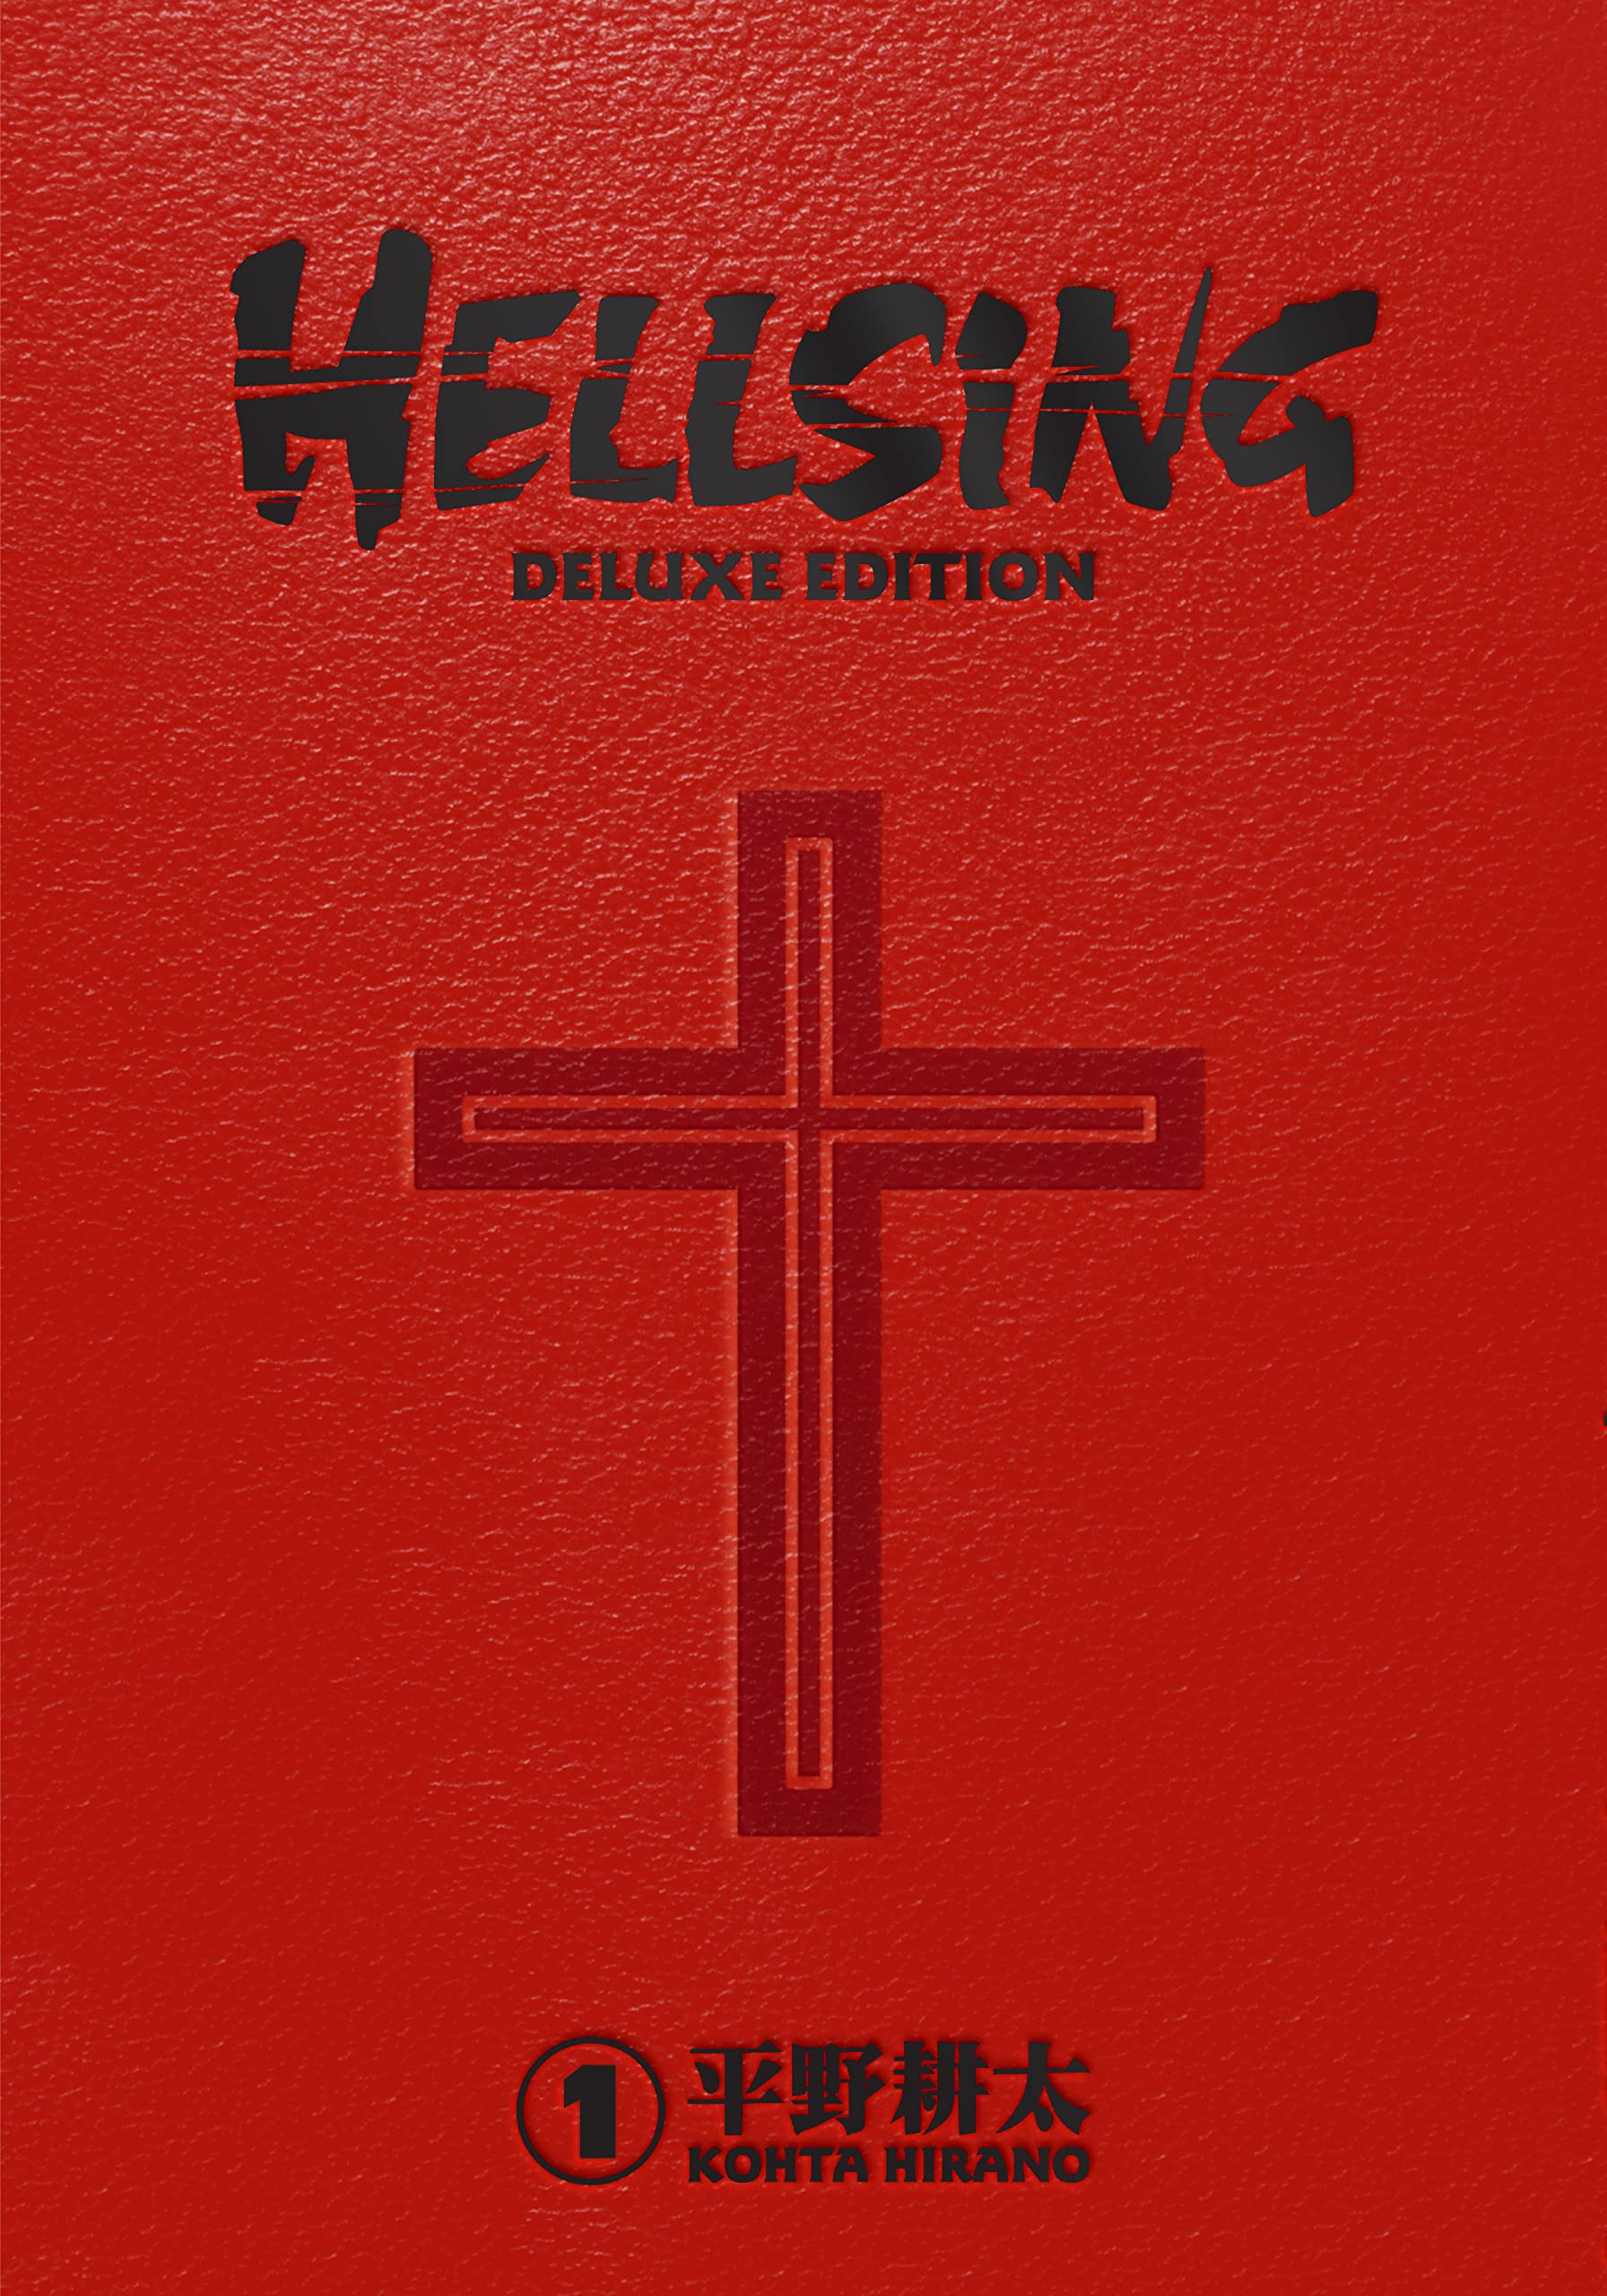 Hellsing Deluxe Edition Vol. 01